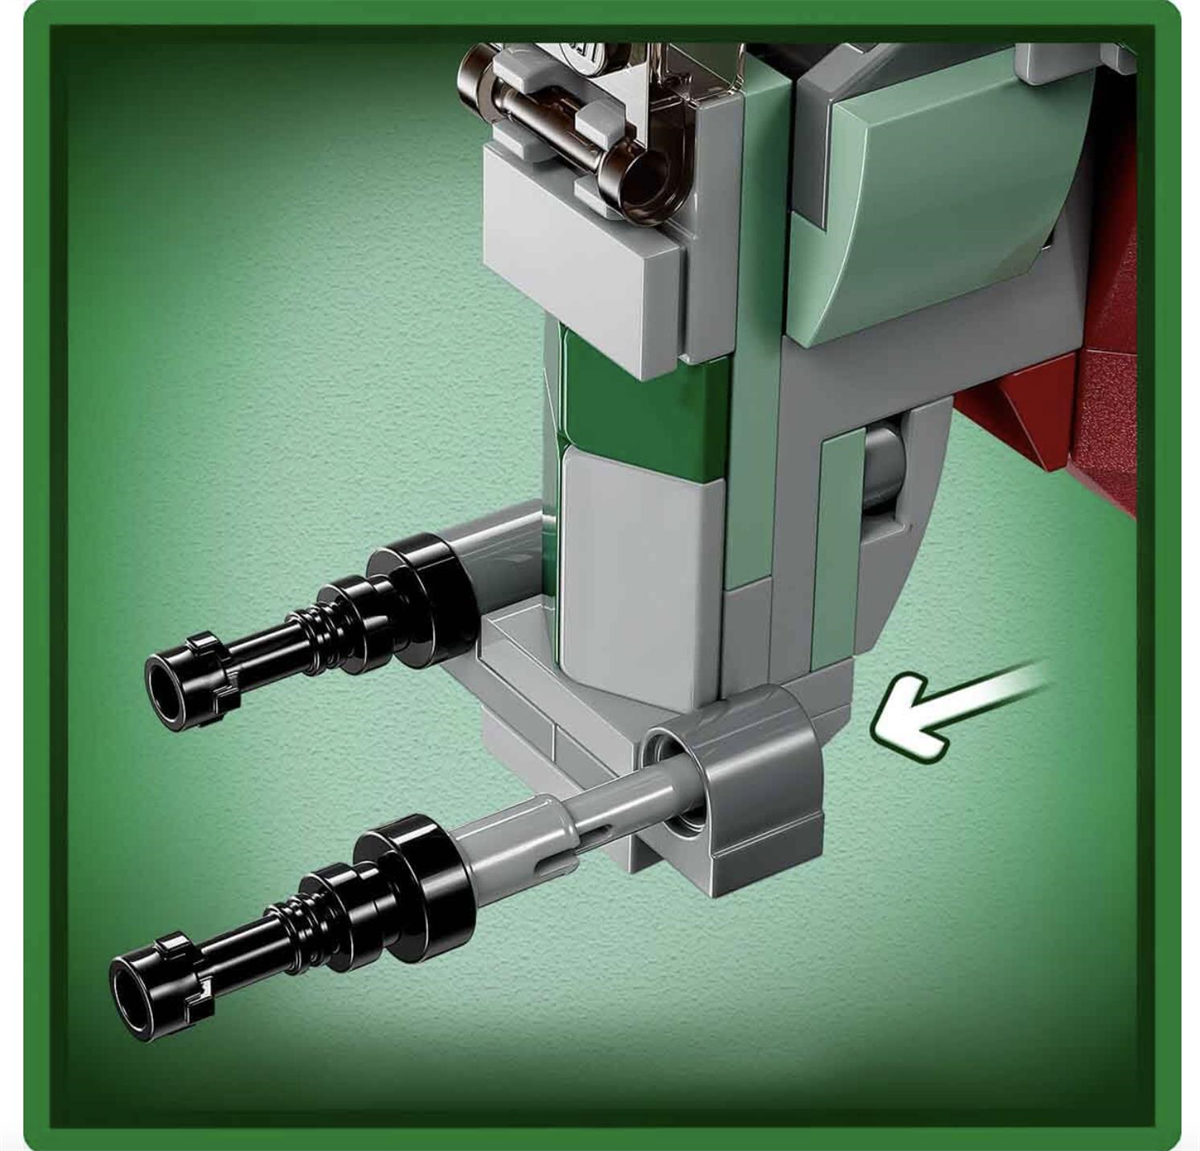 Lego Star Wars Boba Fett’in Starship’i Mikro Savaşçı 75344 | Toysall